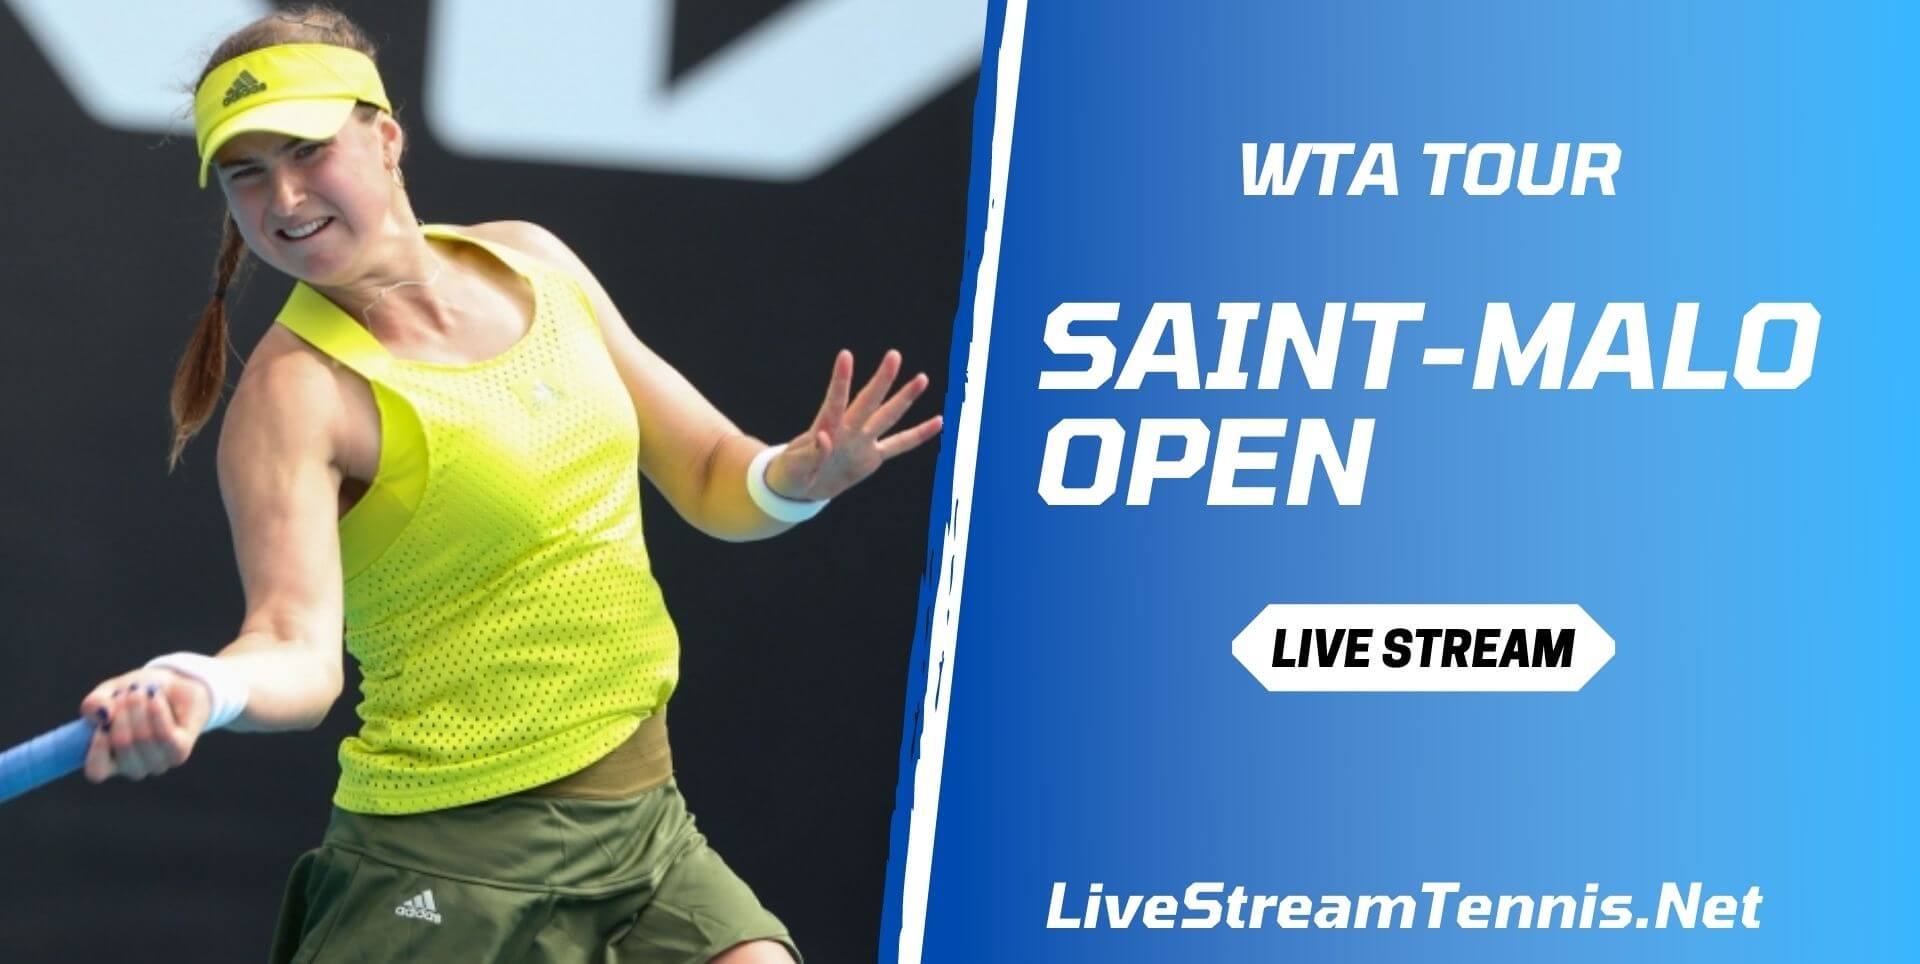 saint-malo-open-live-stream-tennis-wta